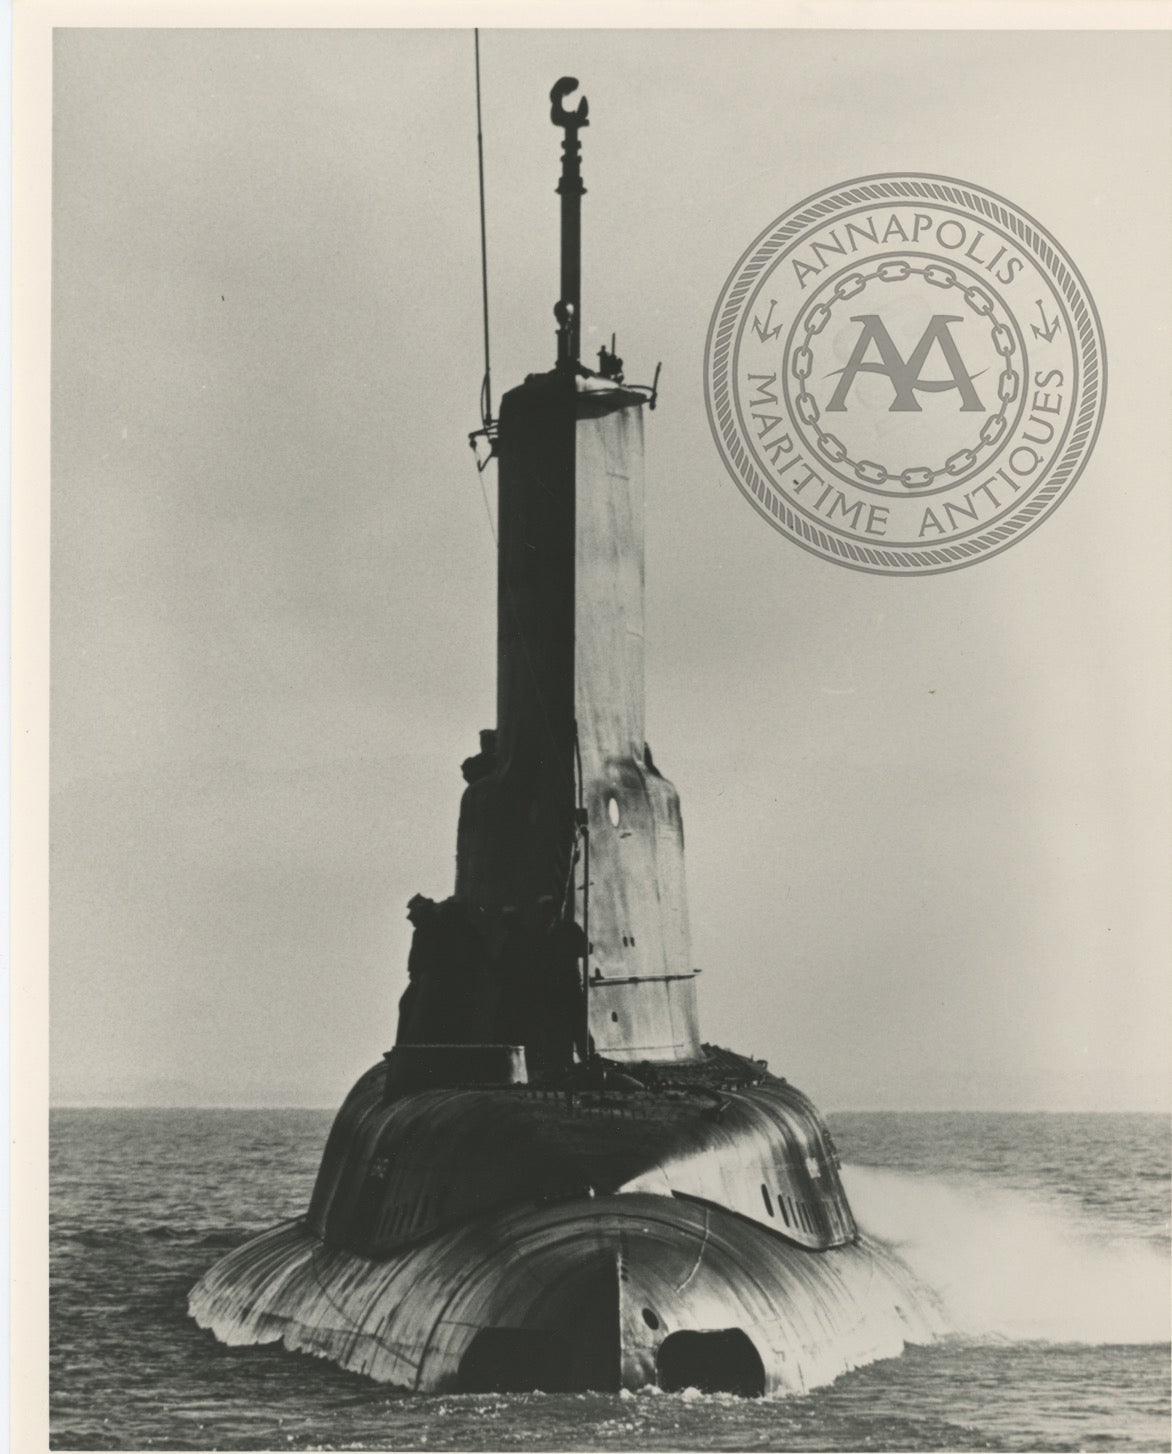 USS Menhaden (SS-377) Submarine